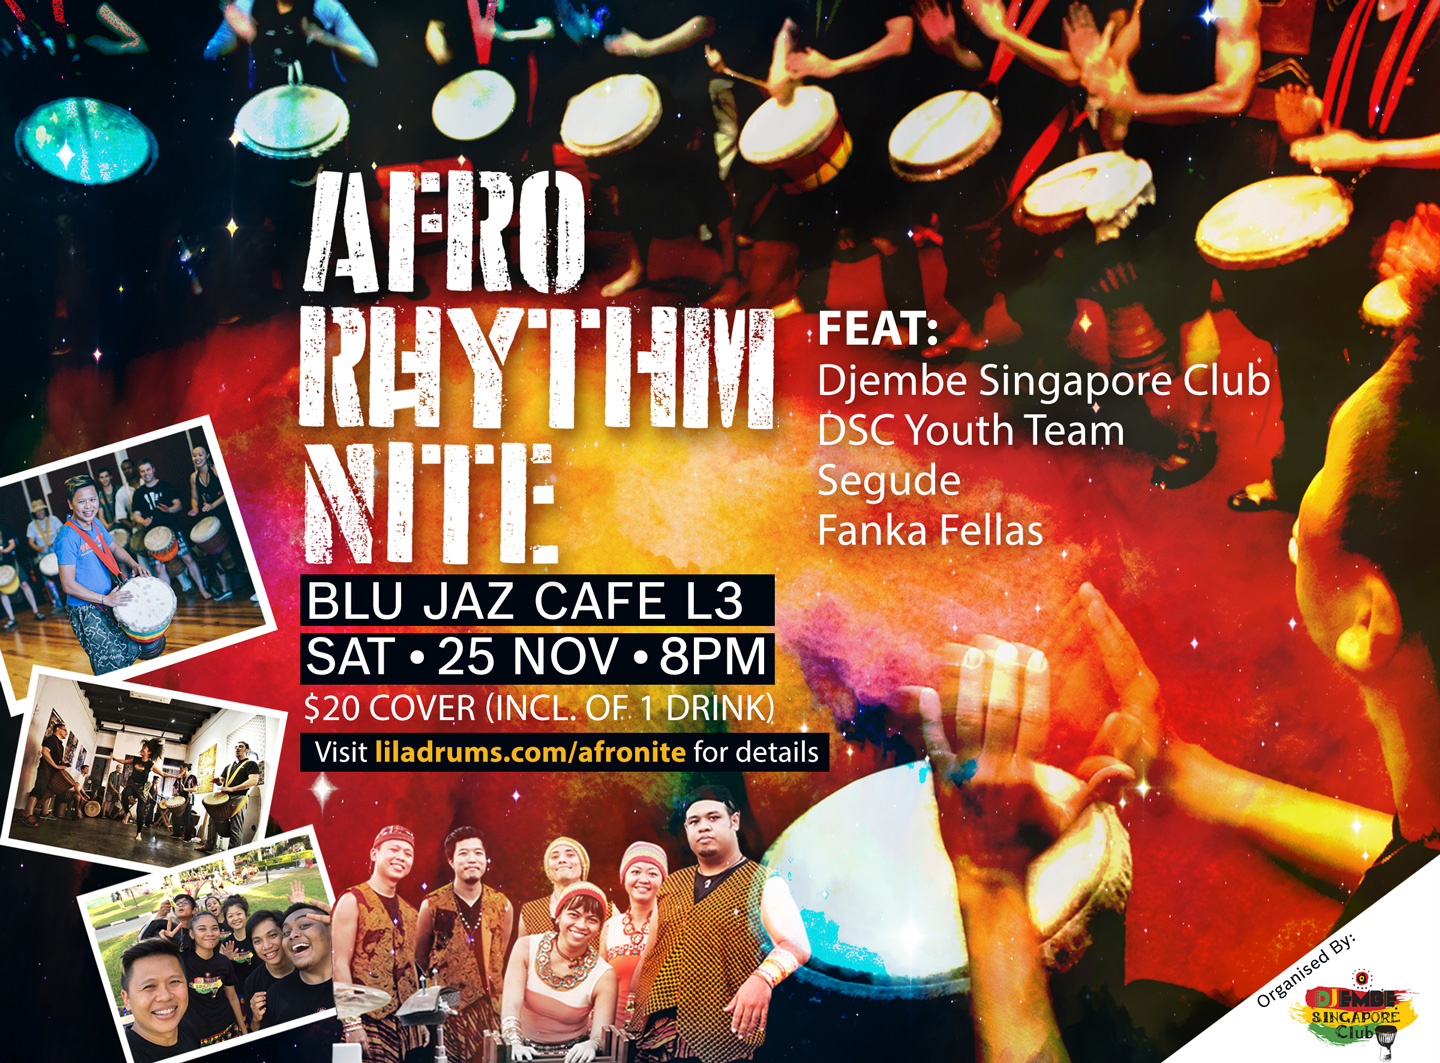 Afro Rhythm Nite